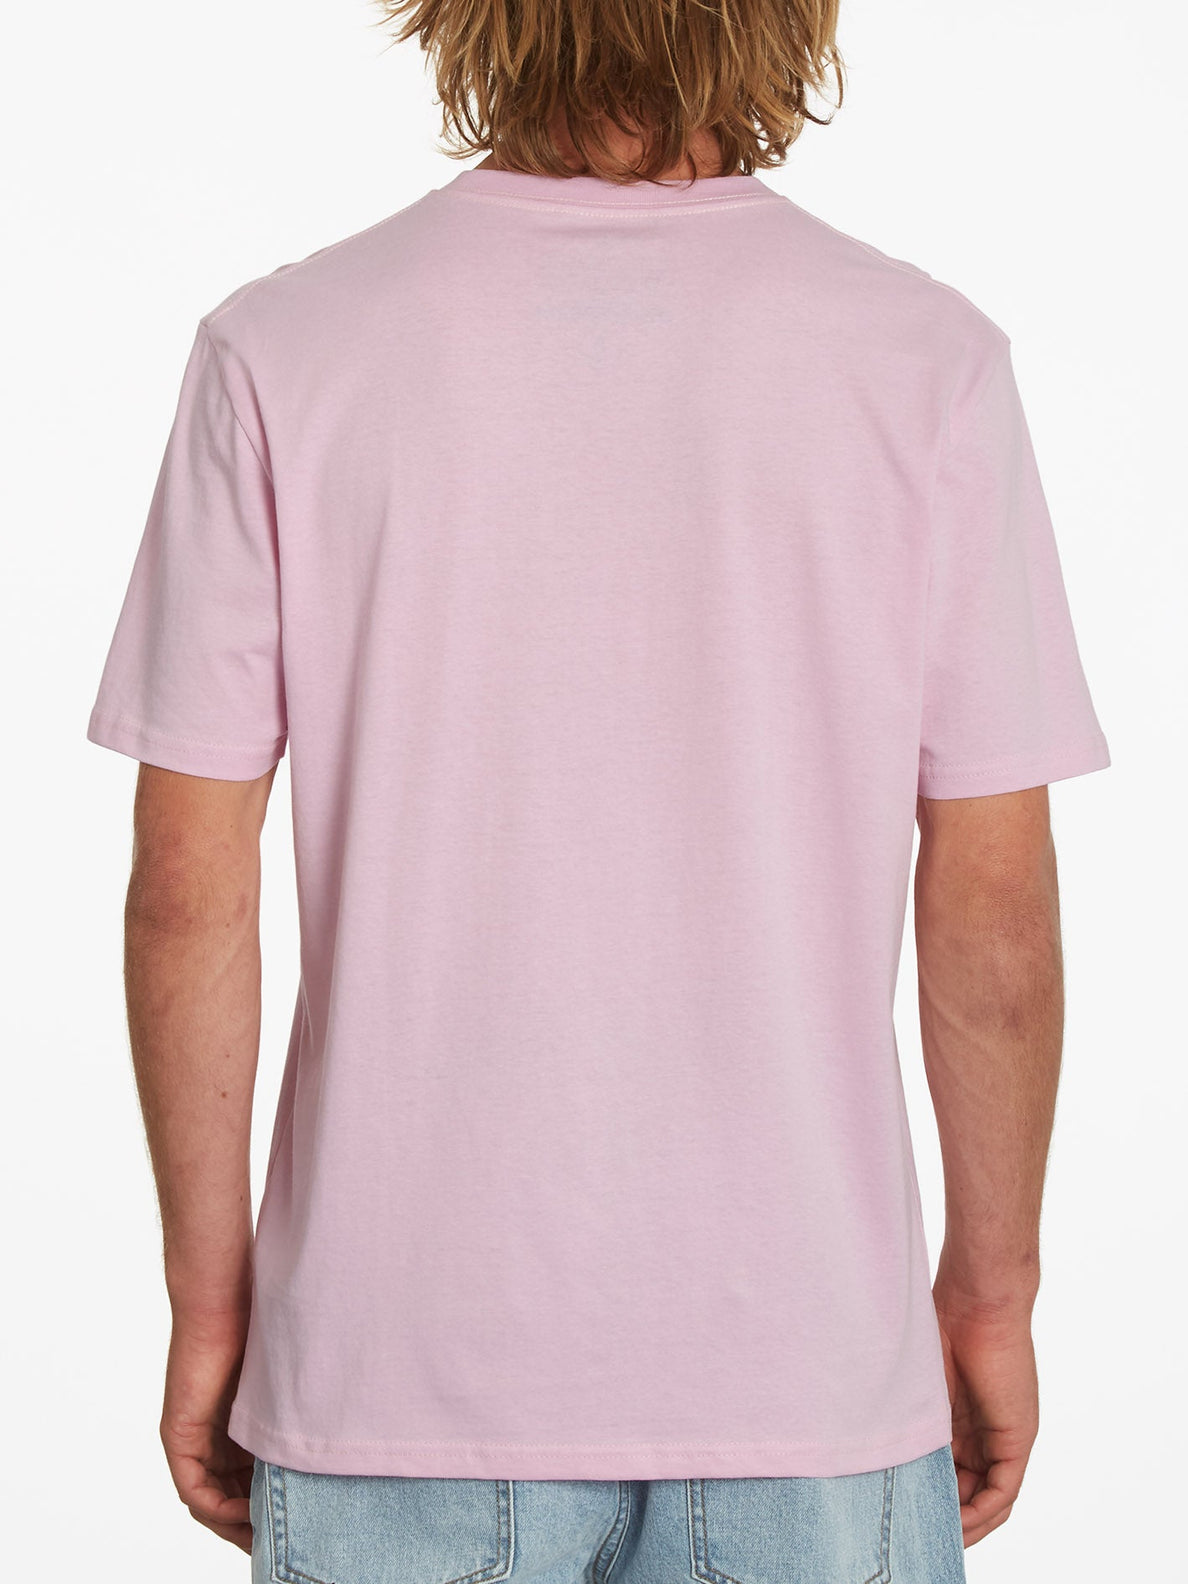 Finkstone T-shirt - PARADISE PINK (A3532211_PDP) [B]